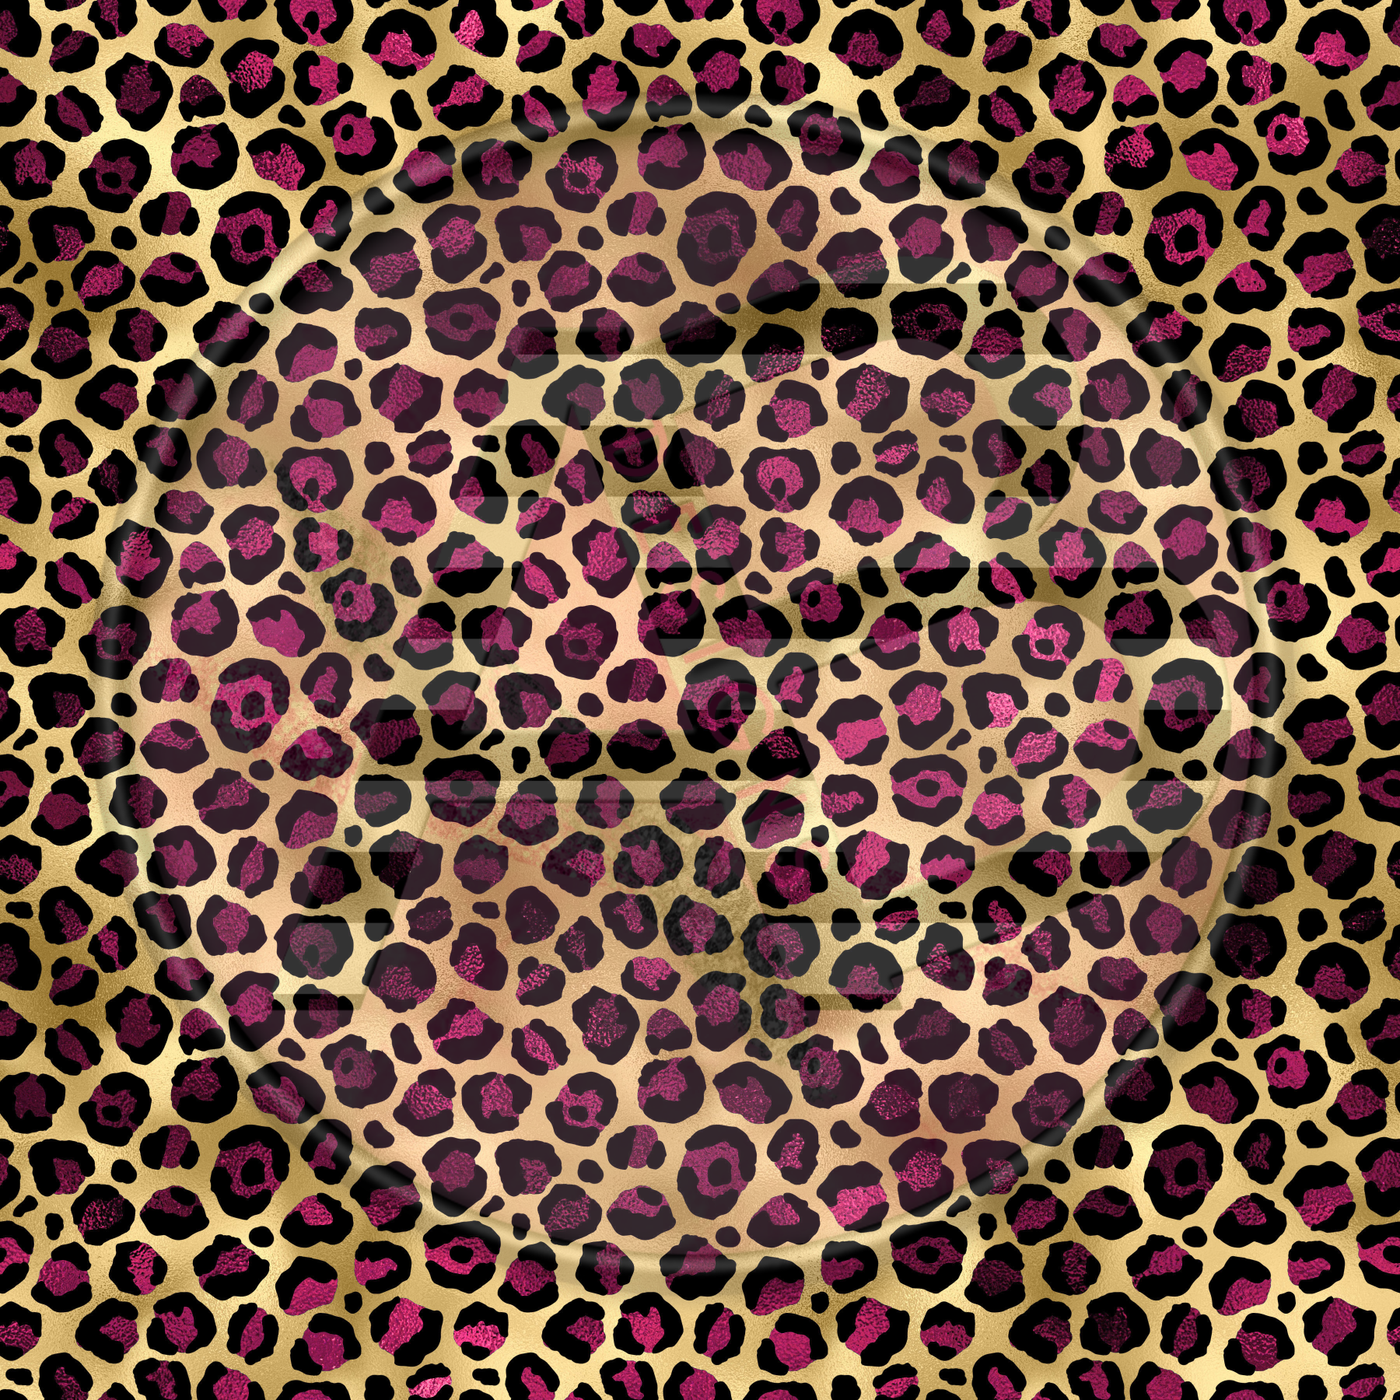 Adhesive Patterned Vinyl - Cheetah 227